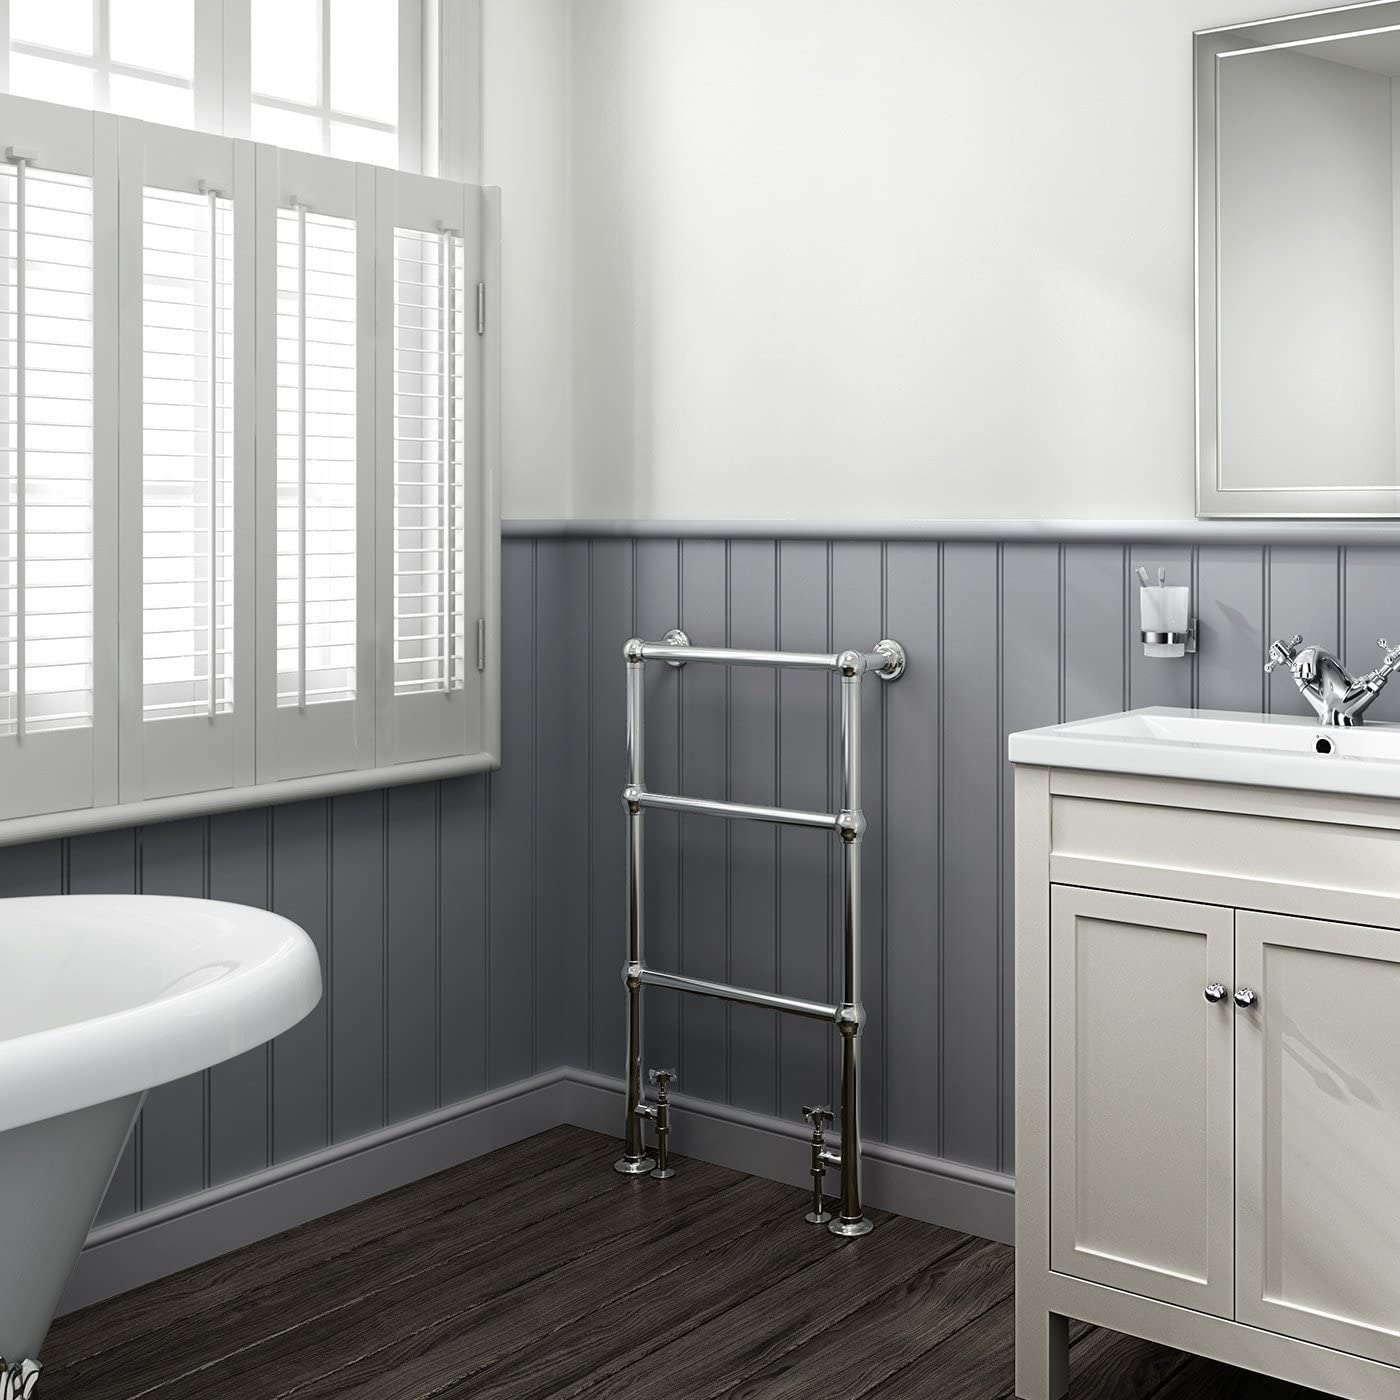 Bathroom4less Heating,Heated Towel Rails Traditional Vertical Heated Towel Rail - 535mm x 914mm